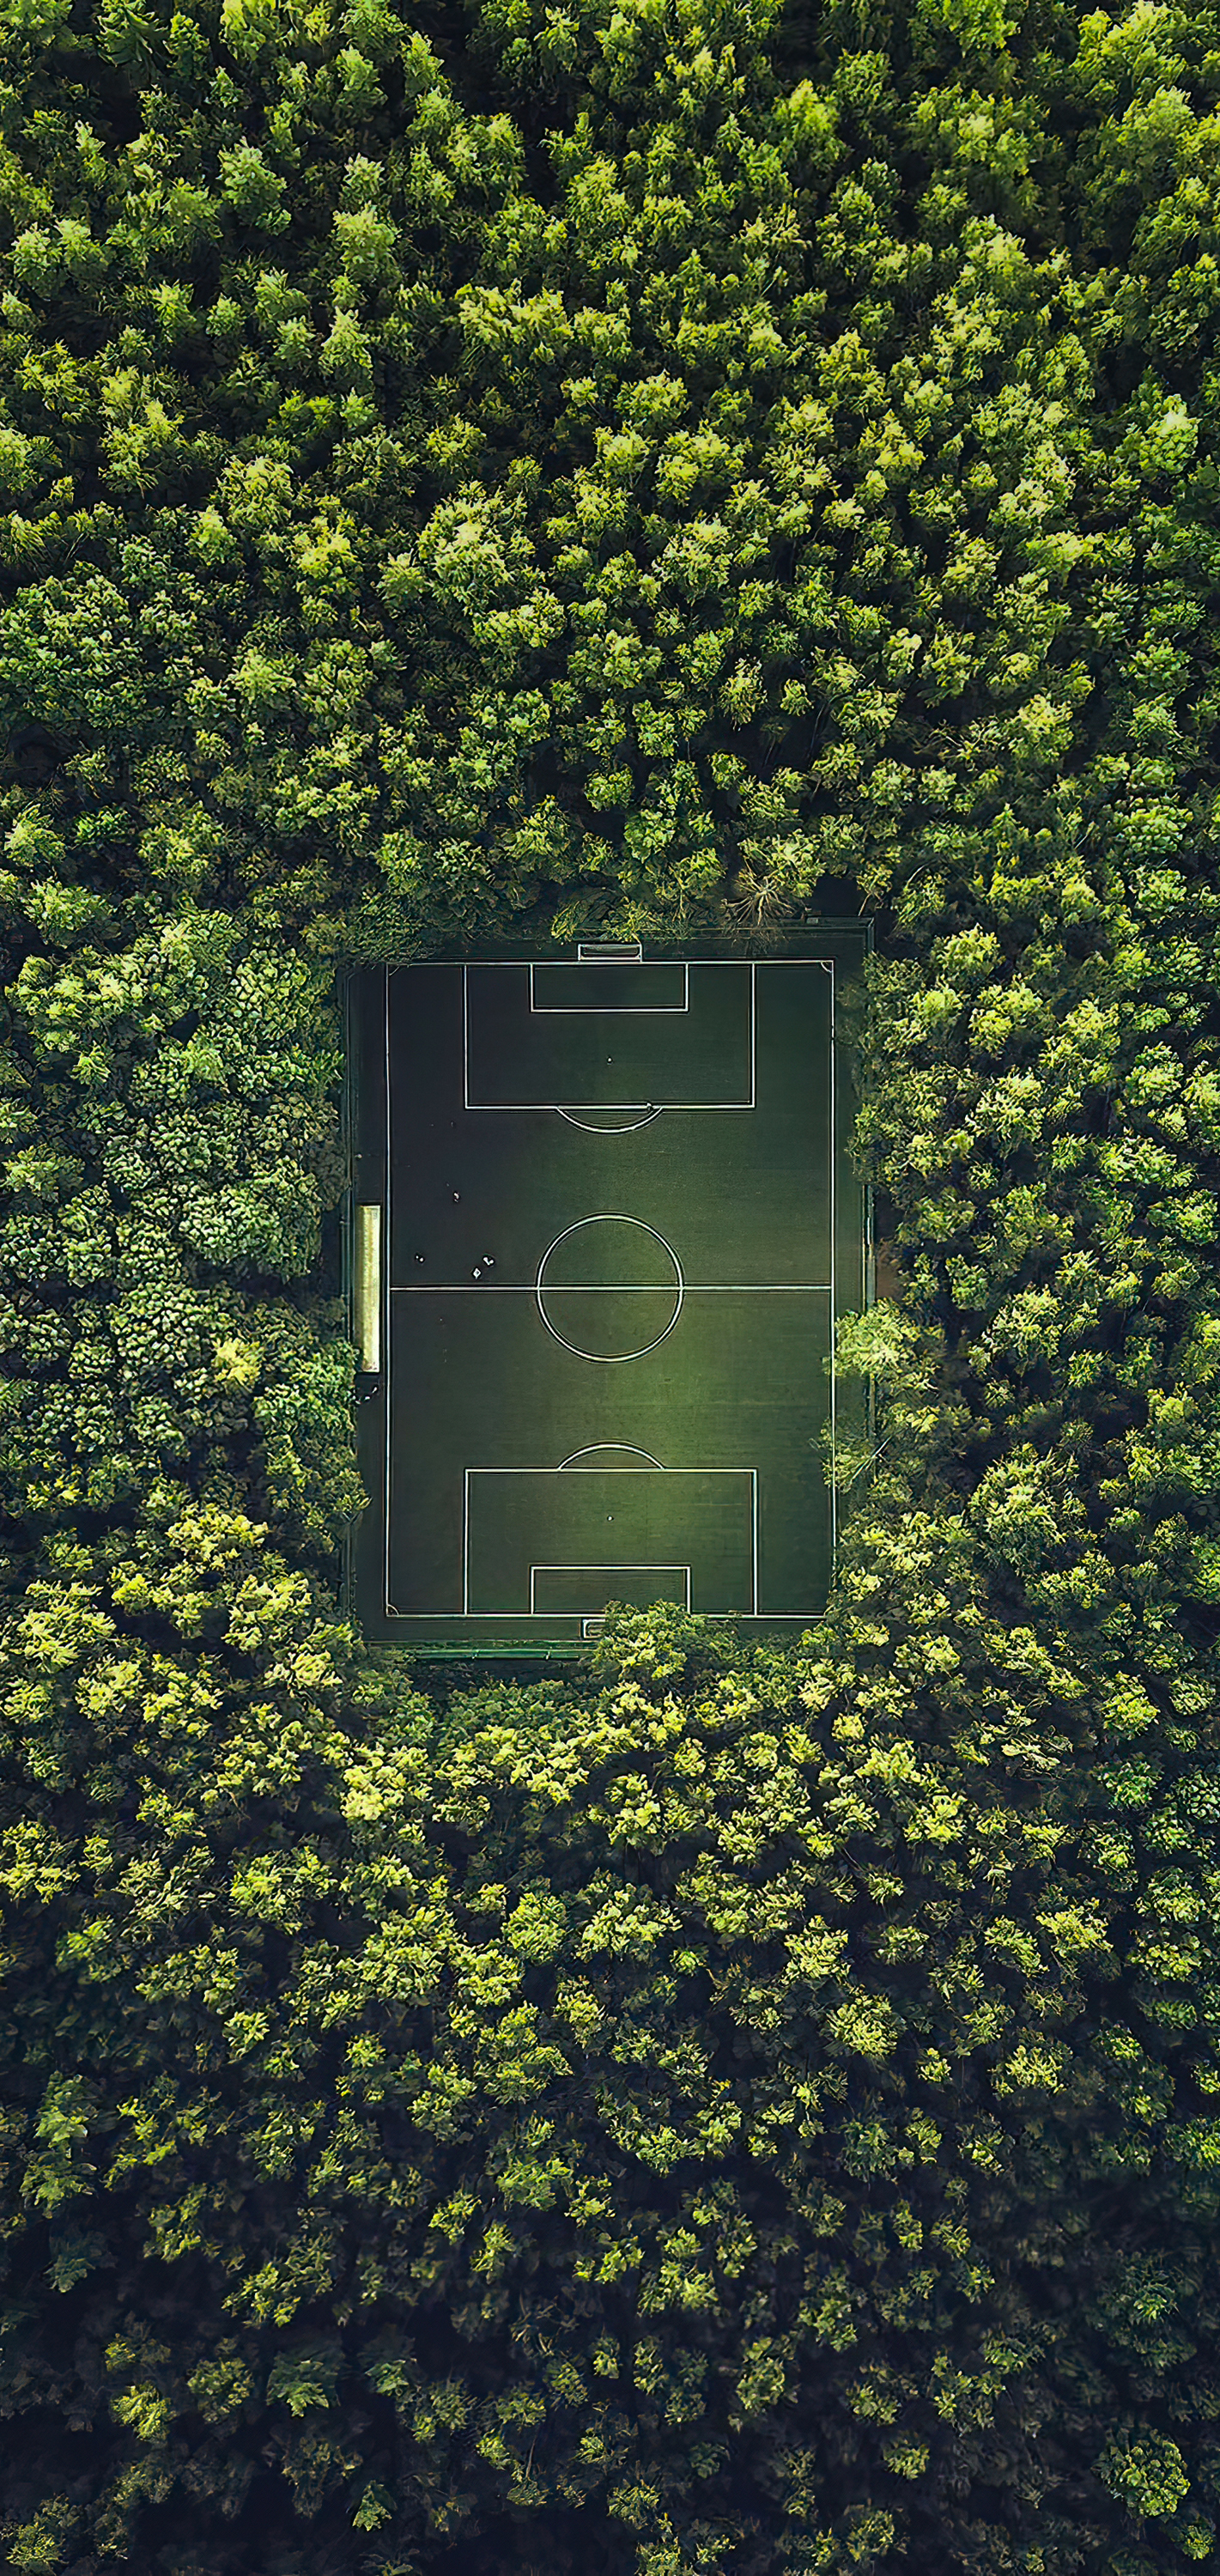 soccer field wallpaper